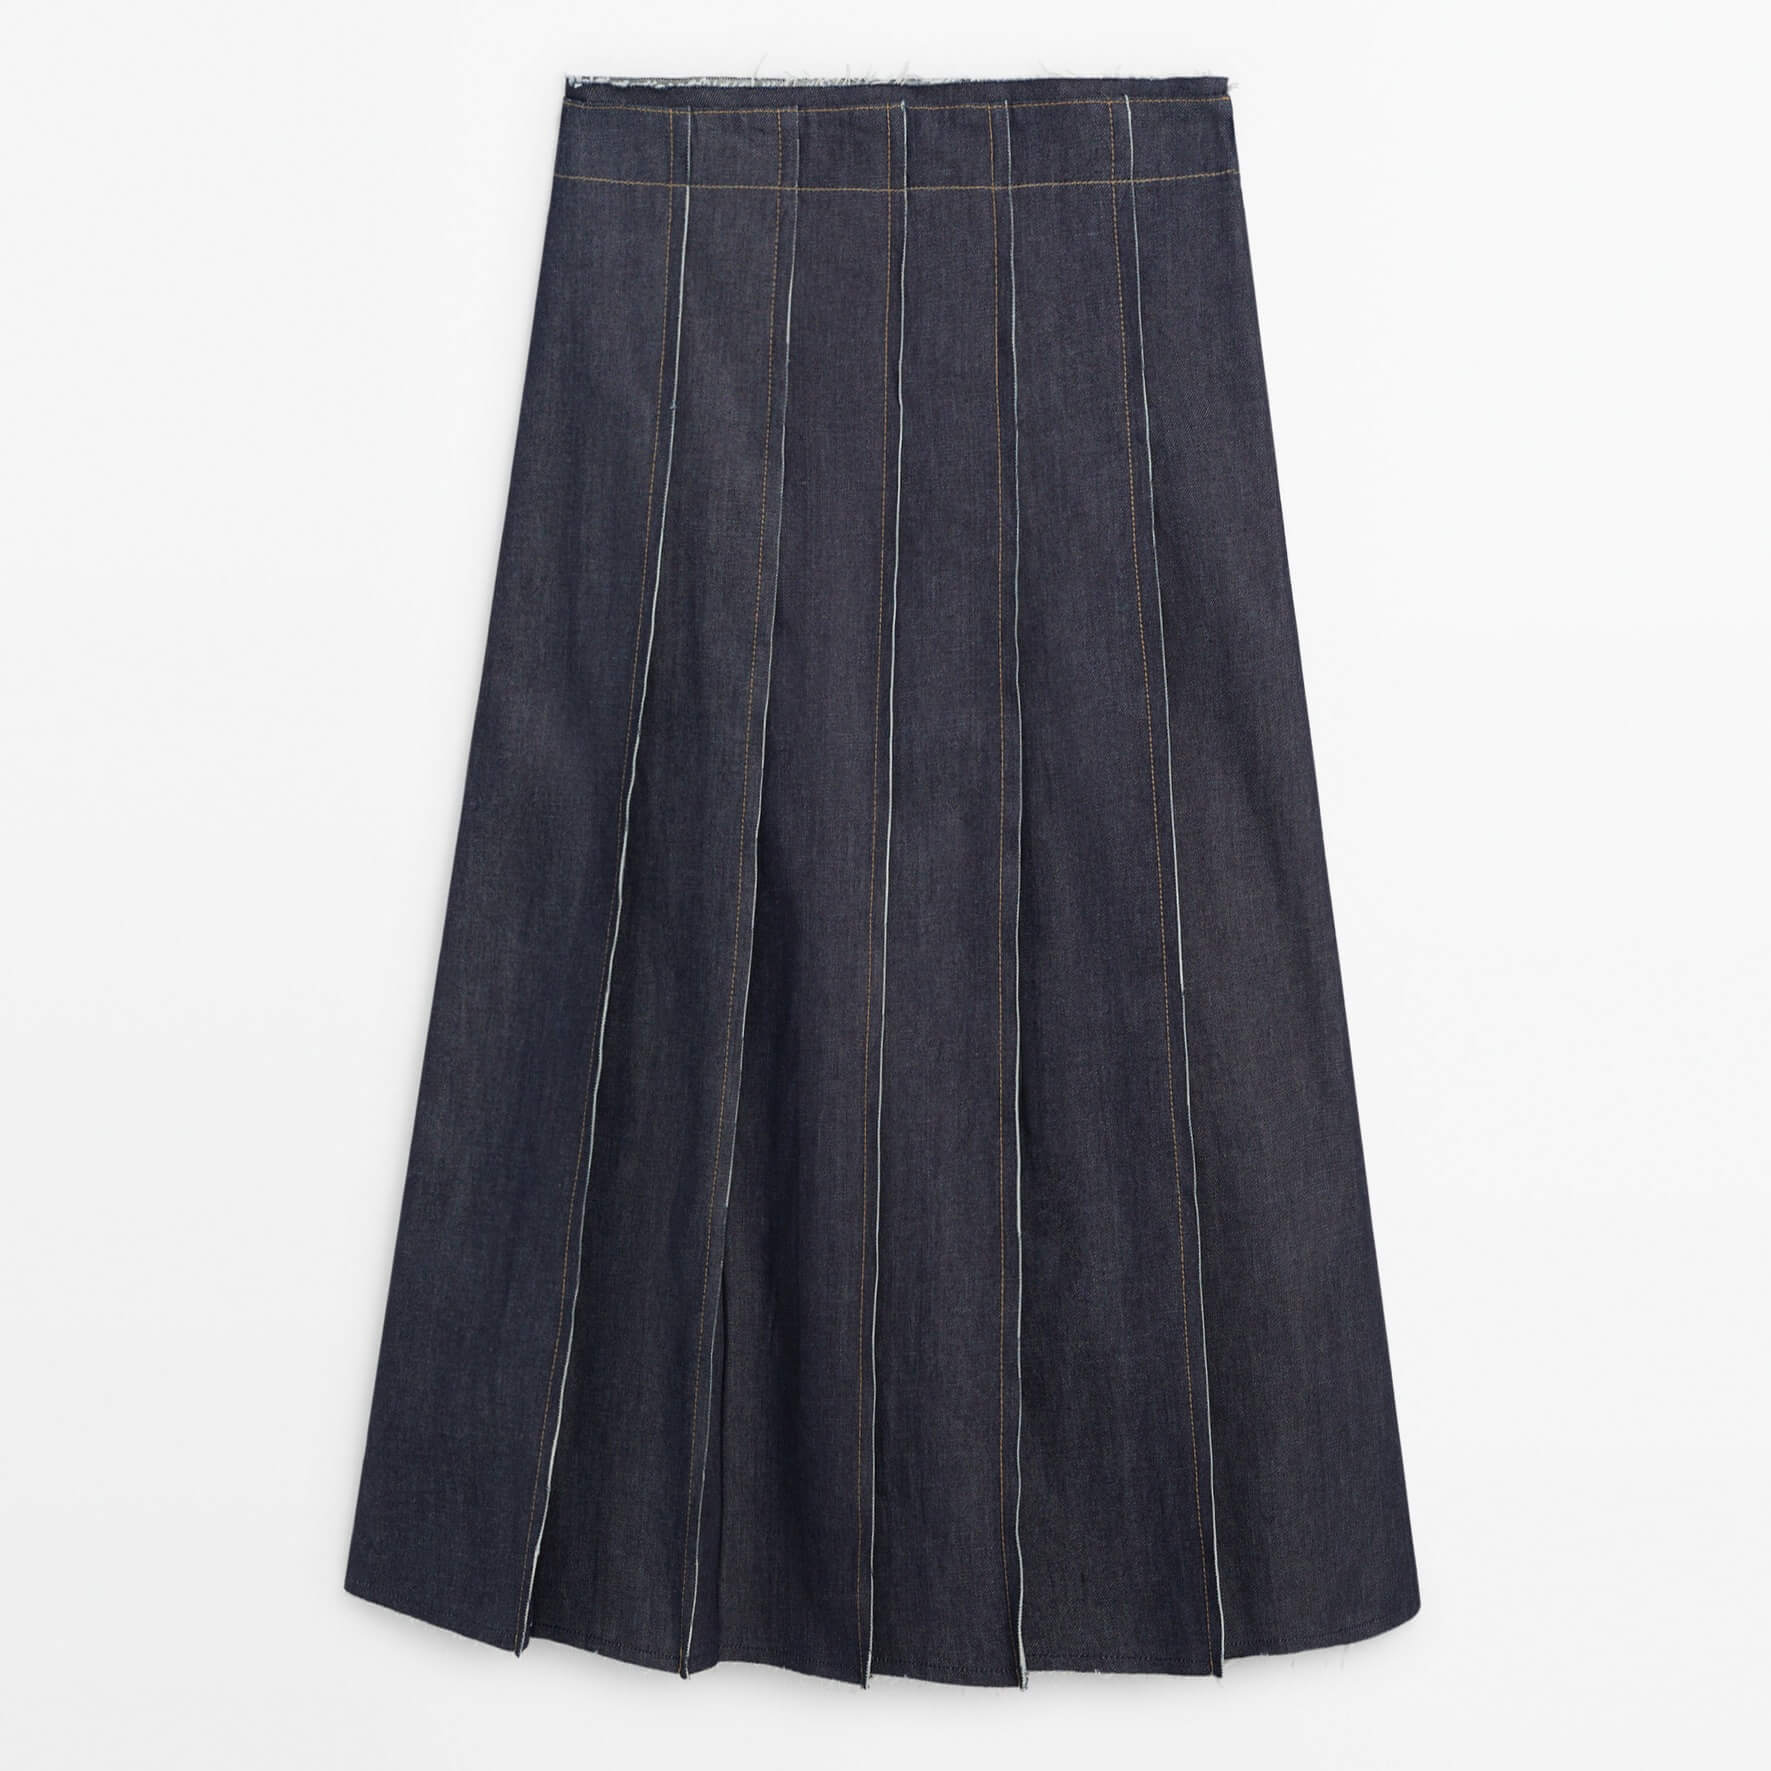 черная джинсовая юбка миди со швами urban revivo Юбка Massimo Dutti Denim Midi With Seams And Frayed Hem, темно-синий